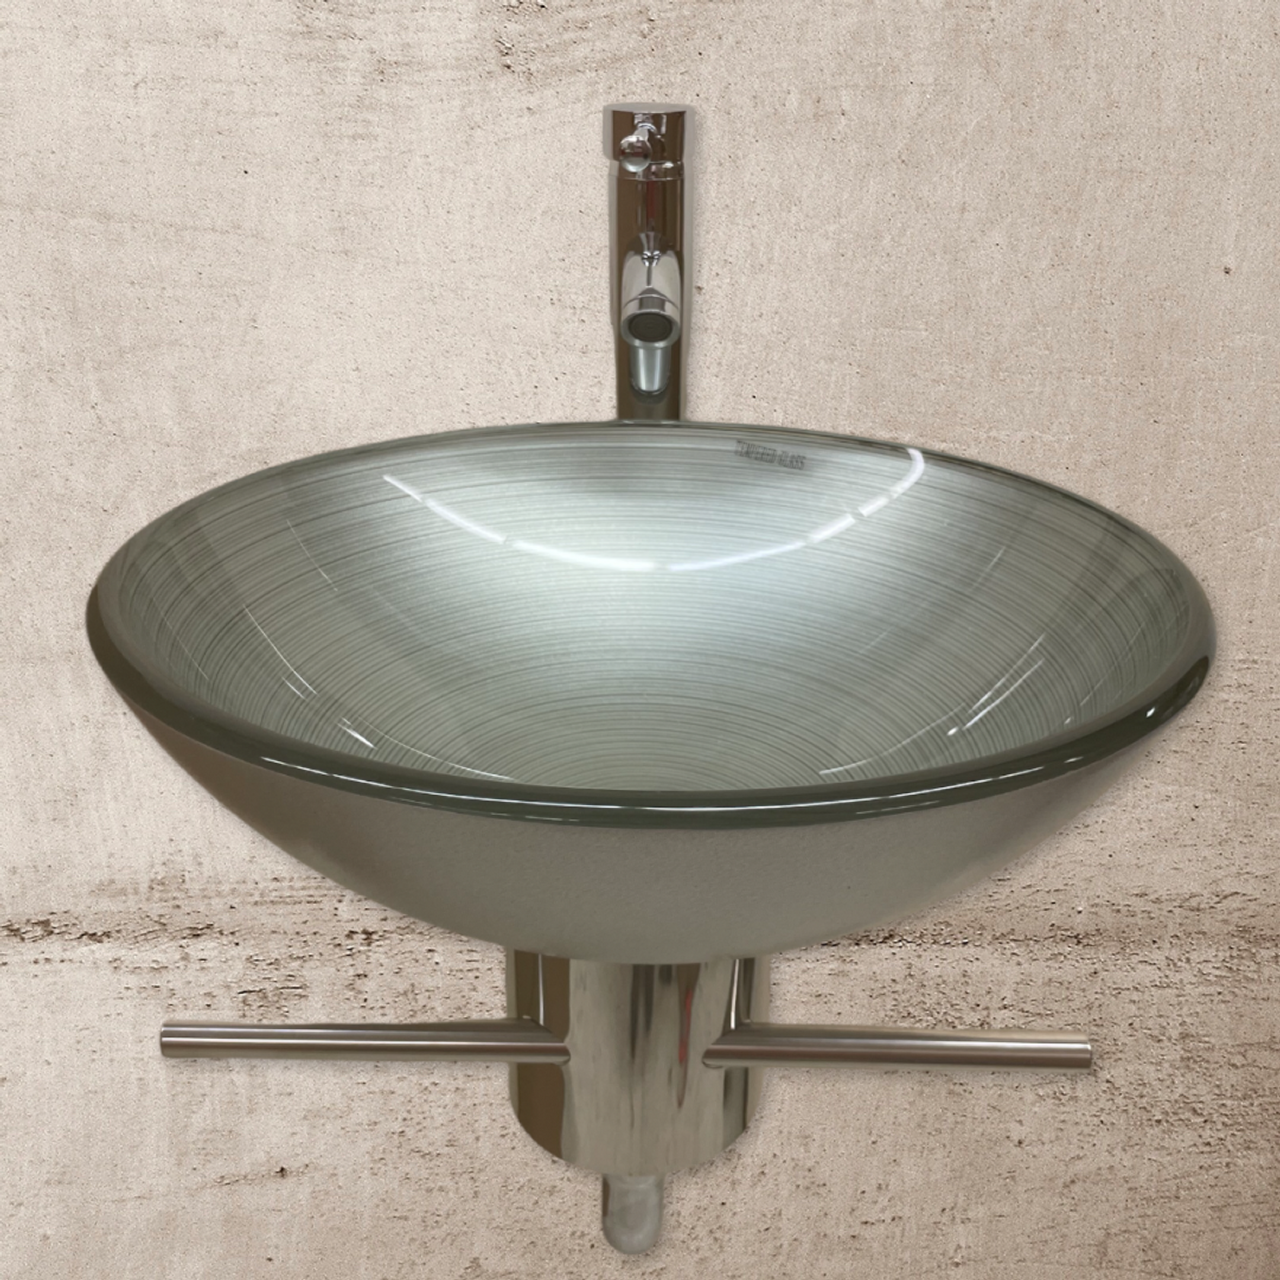 LV-002R Lorixon Small Bathroom Vanity Glass Bowl Vessel Sink Combo